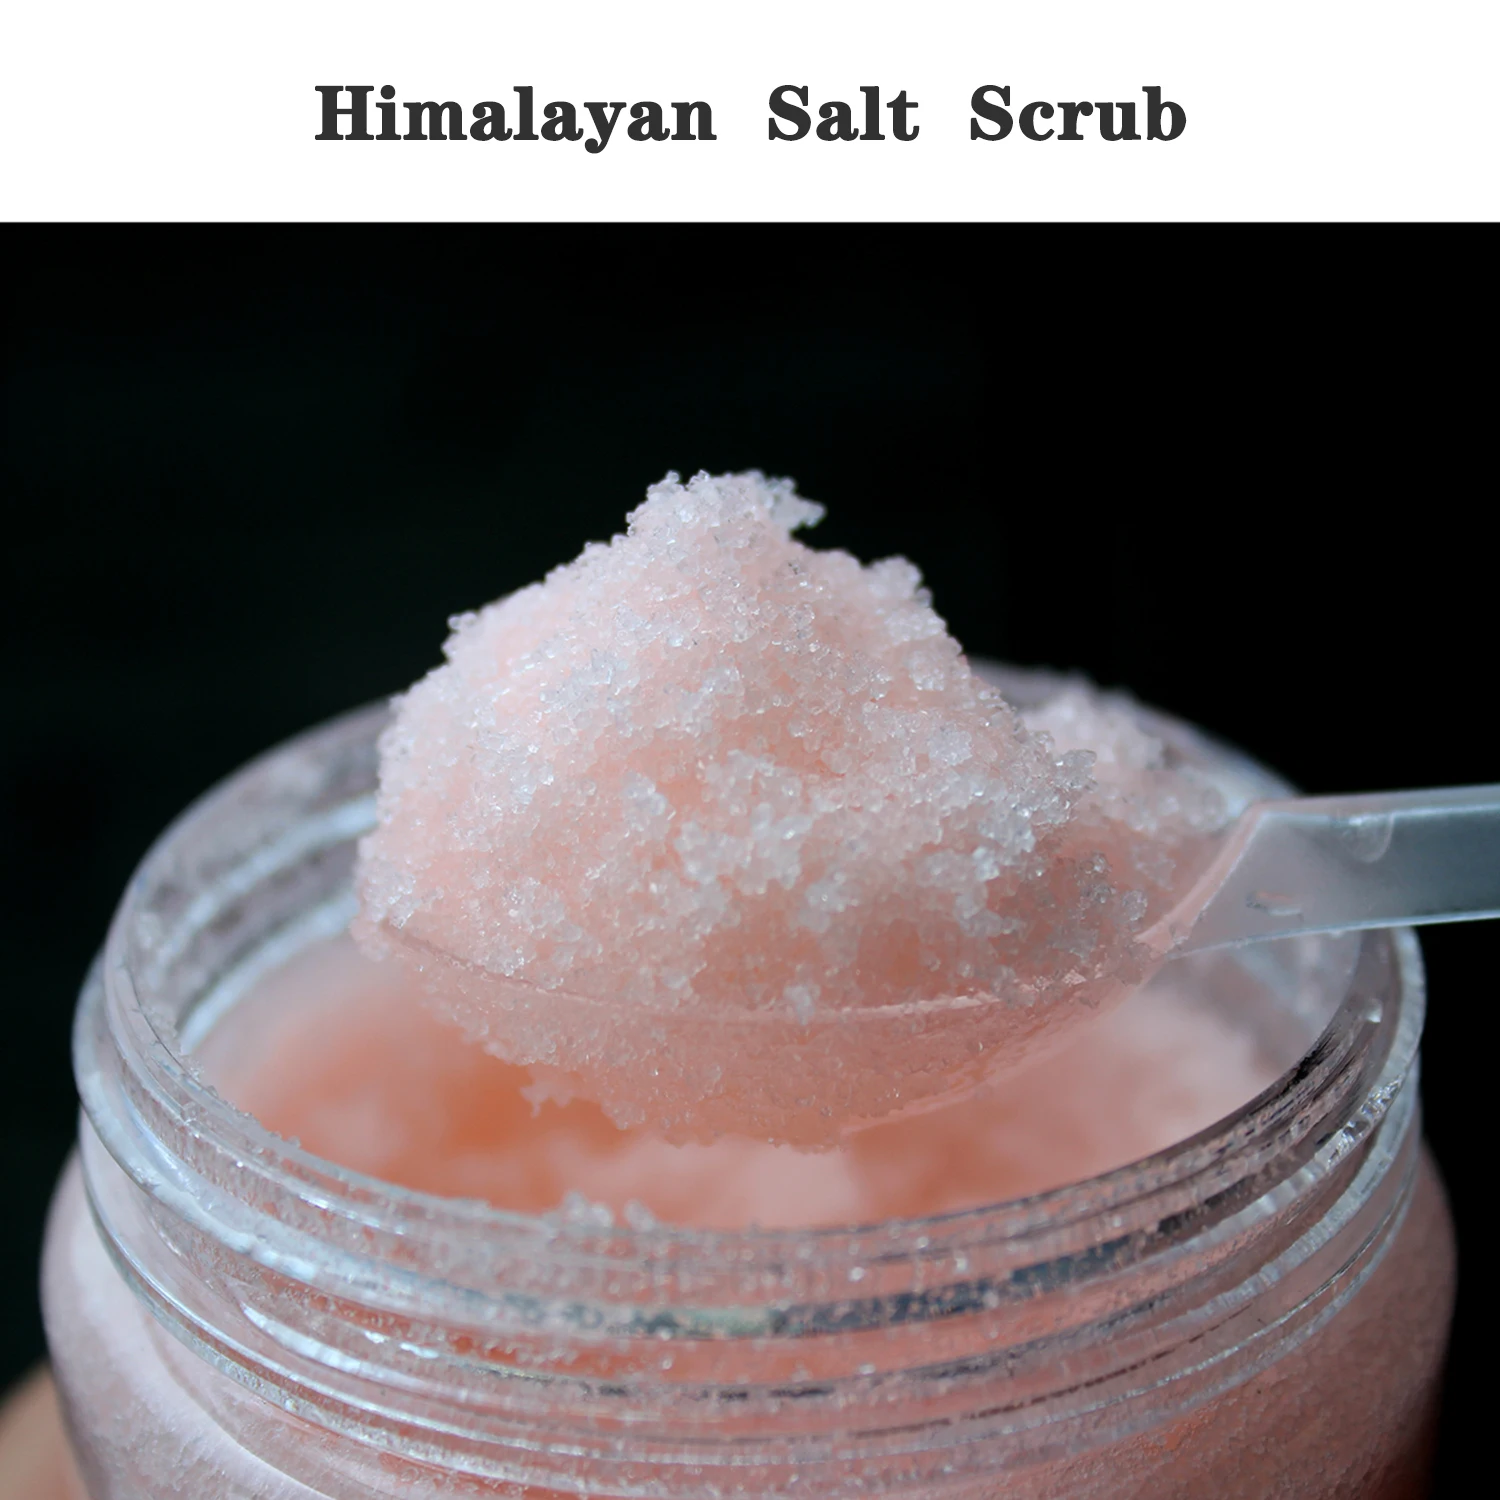 OEM ODM whitening vegan bodyscrub whitening spa bath salt scrub exfoliator natural pink himalayan salt whipped body scrub